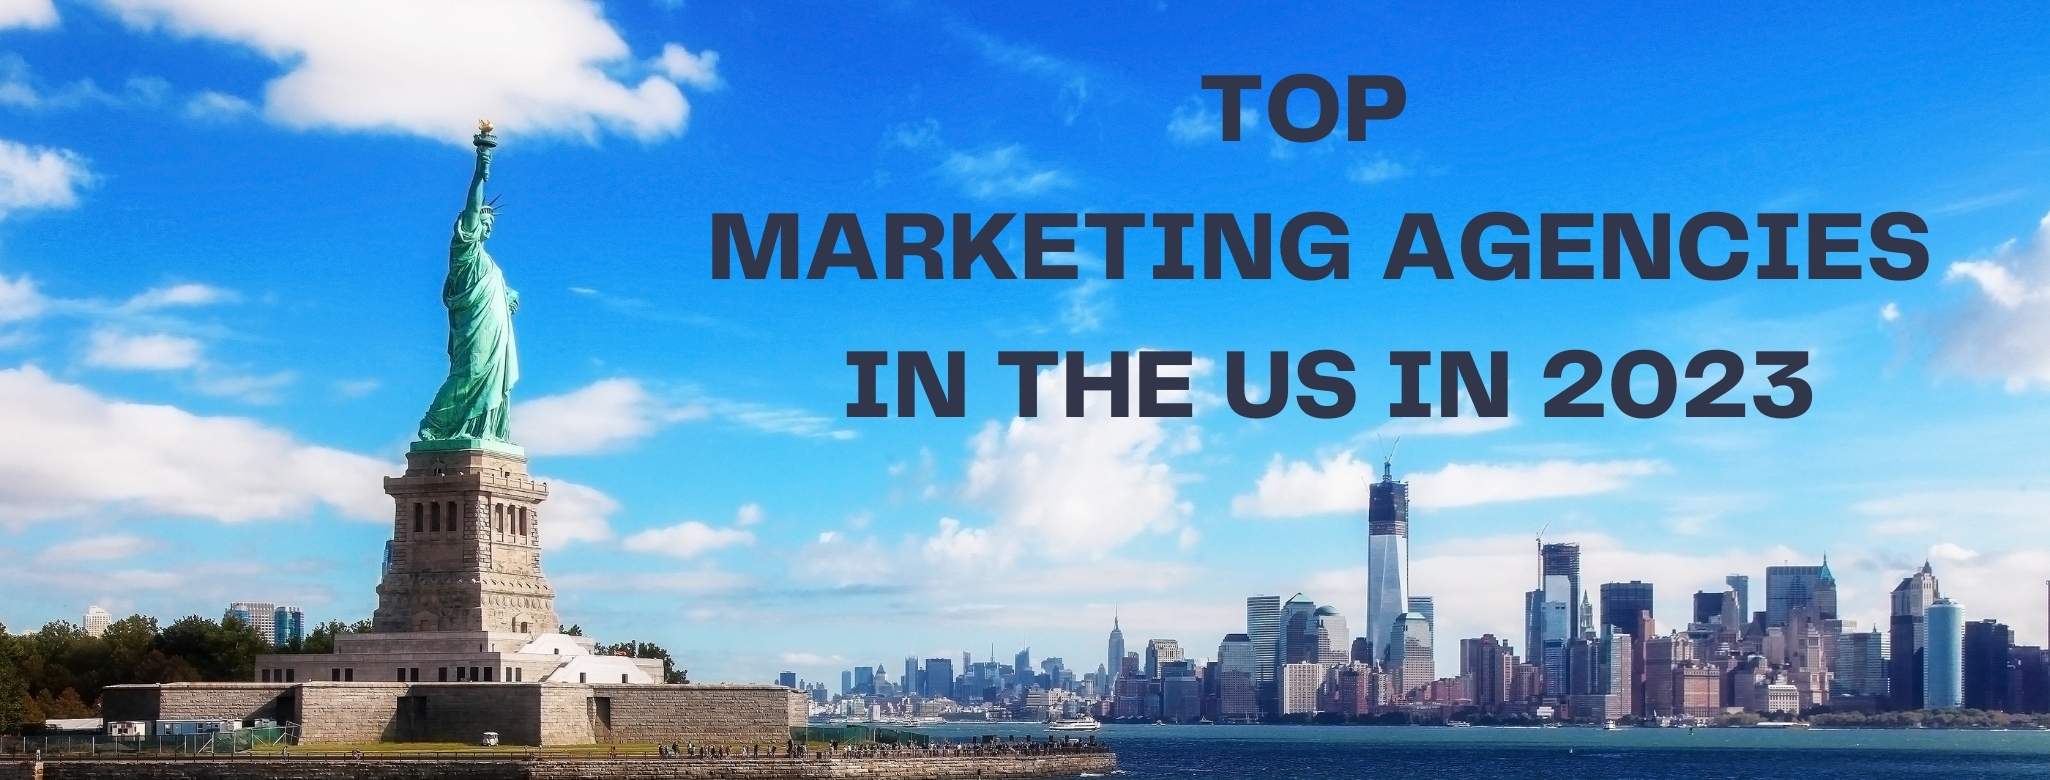 top marketing agencies in the us